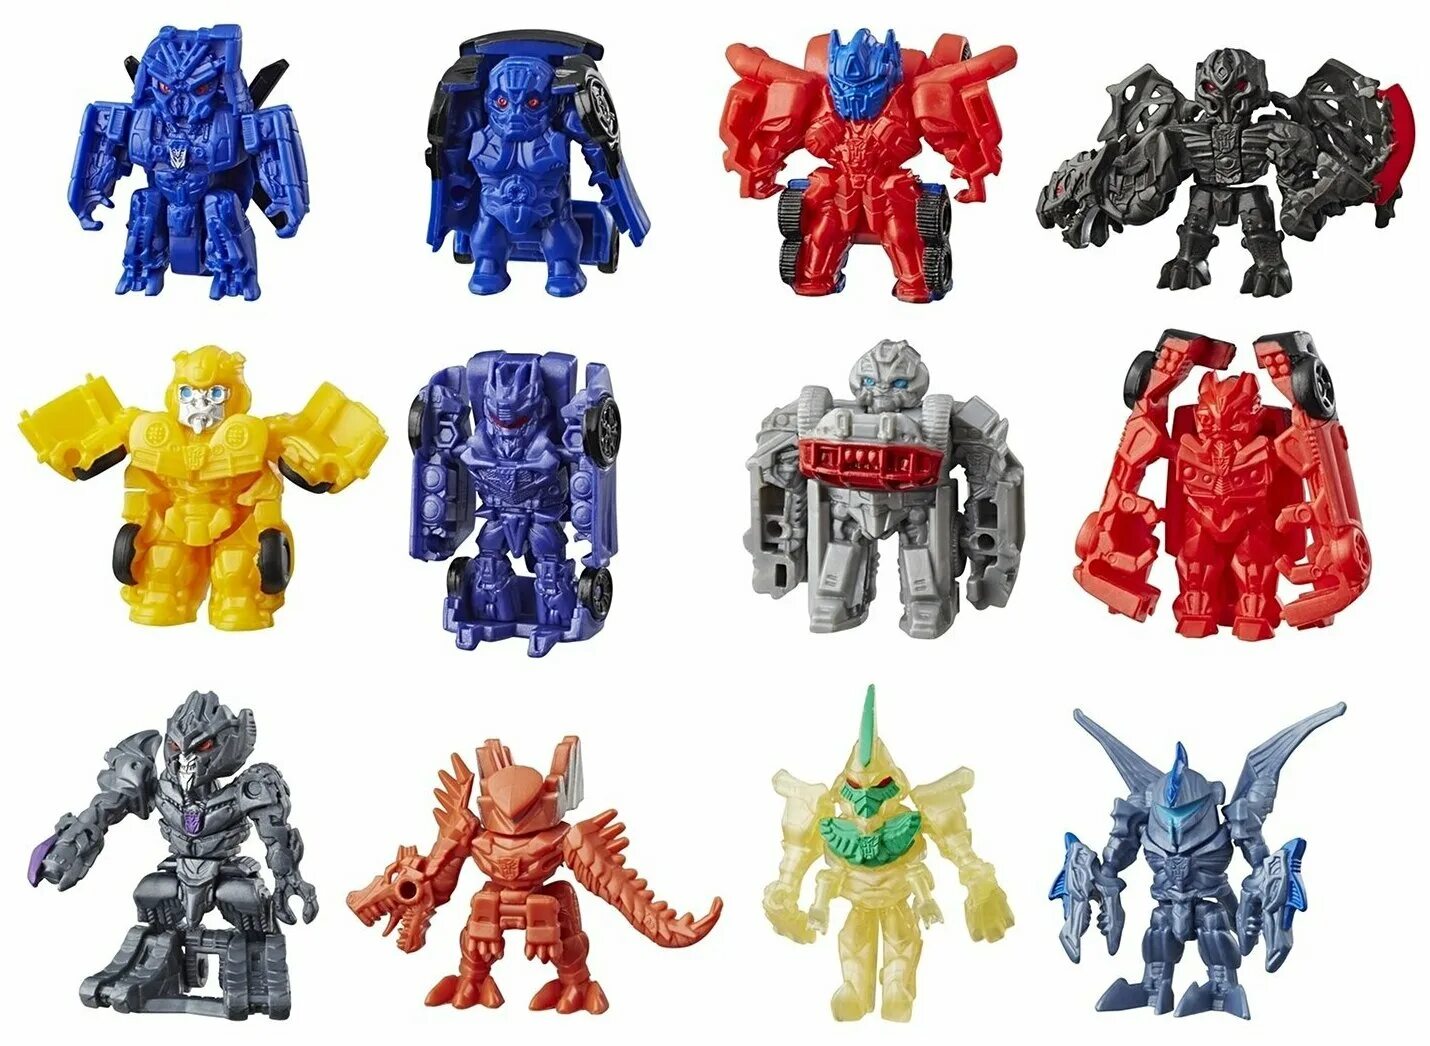 Transformers mini. E0692 трансформеры мини Титан. Hasbro Transformers e0692 трансформеры мини. Трансформеры Hasbro 5 мини-Титан 1008086. Трансформеры фигурки Хасбро.